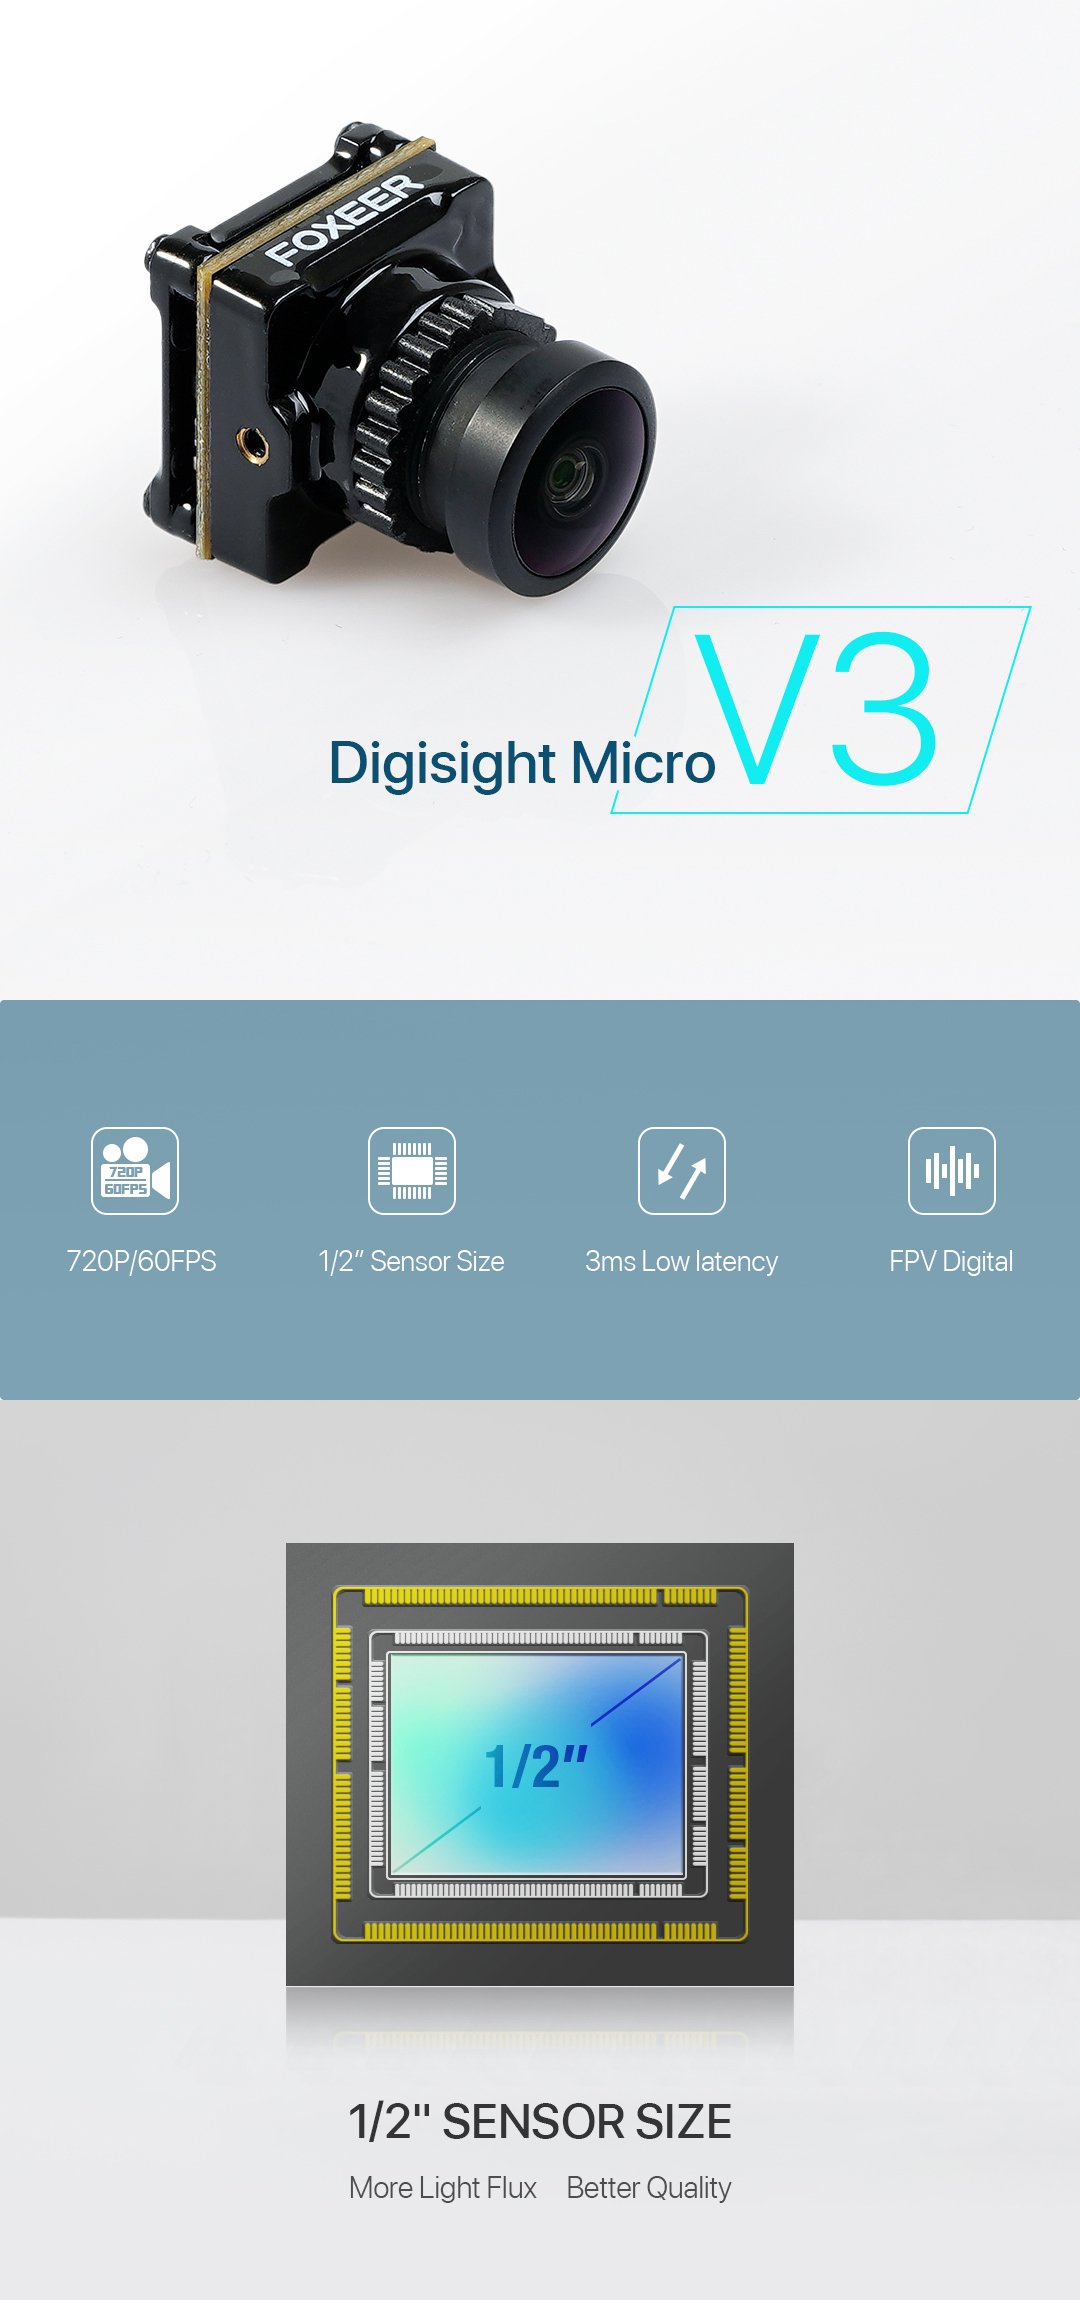 Foxeer Digisight 3 Micro Digital 720P 60fps 3ms Latency Sharkbyte FPV MIPI Camera 9 - Foxeer